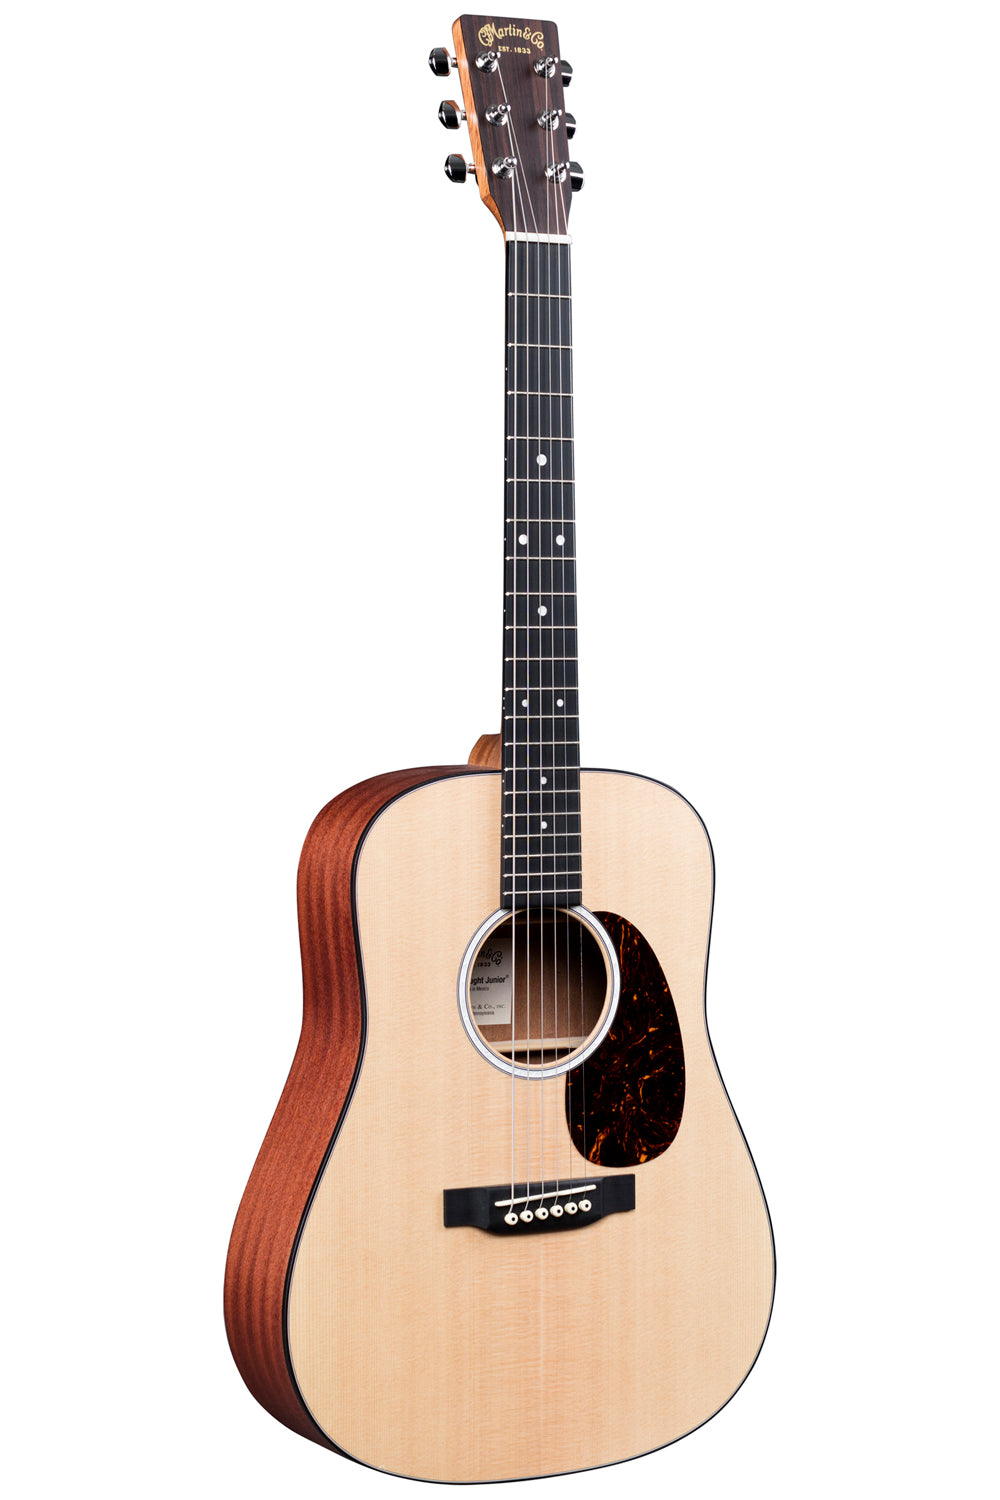 Martin DJr-10E Sitka Top Dreadnought Junior Acoustic Guitar